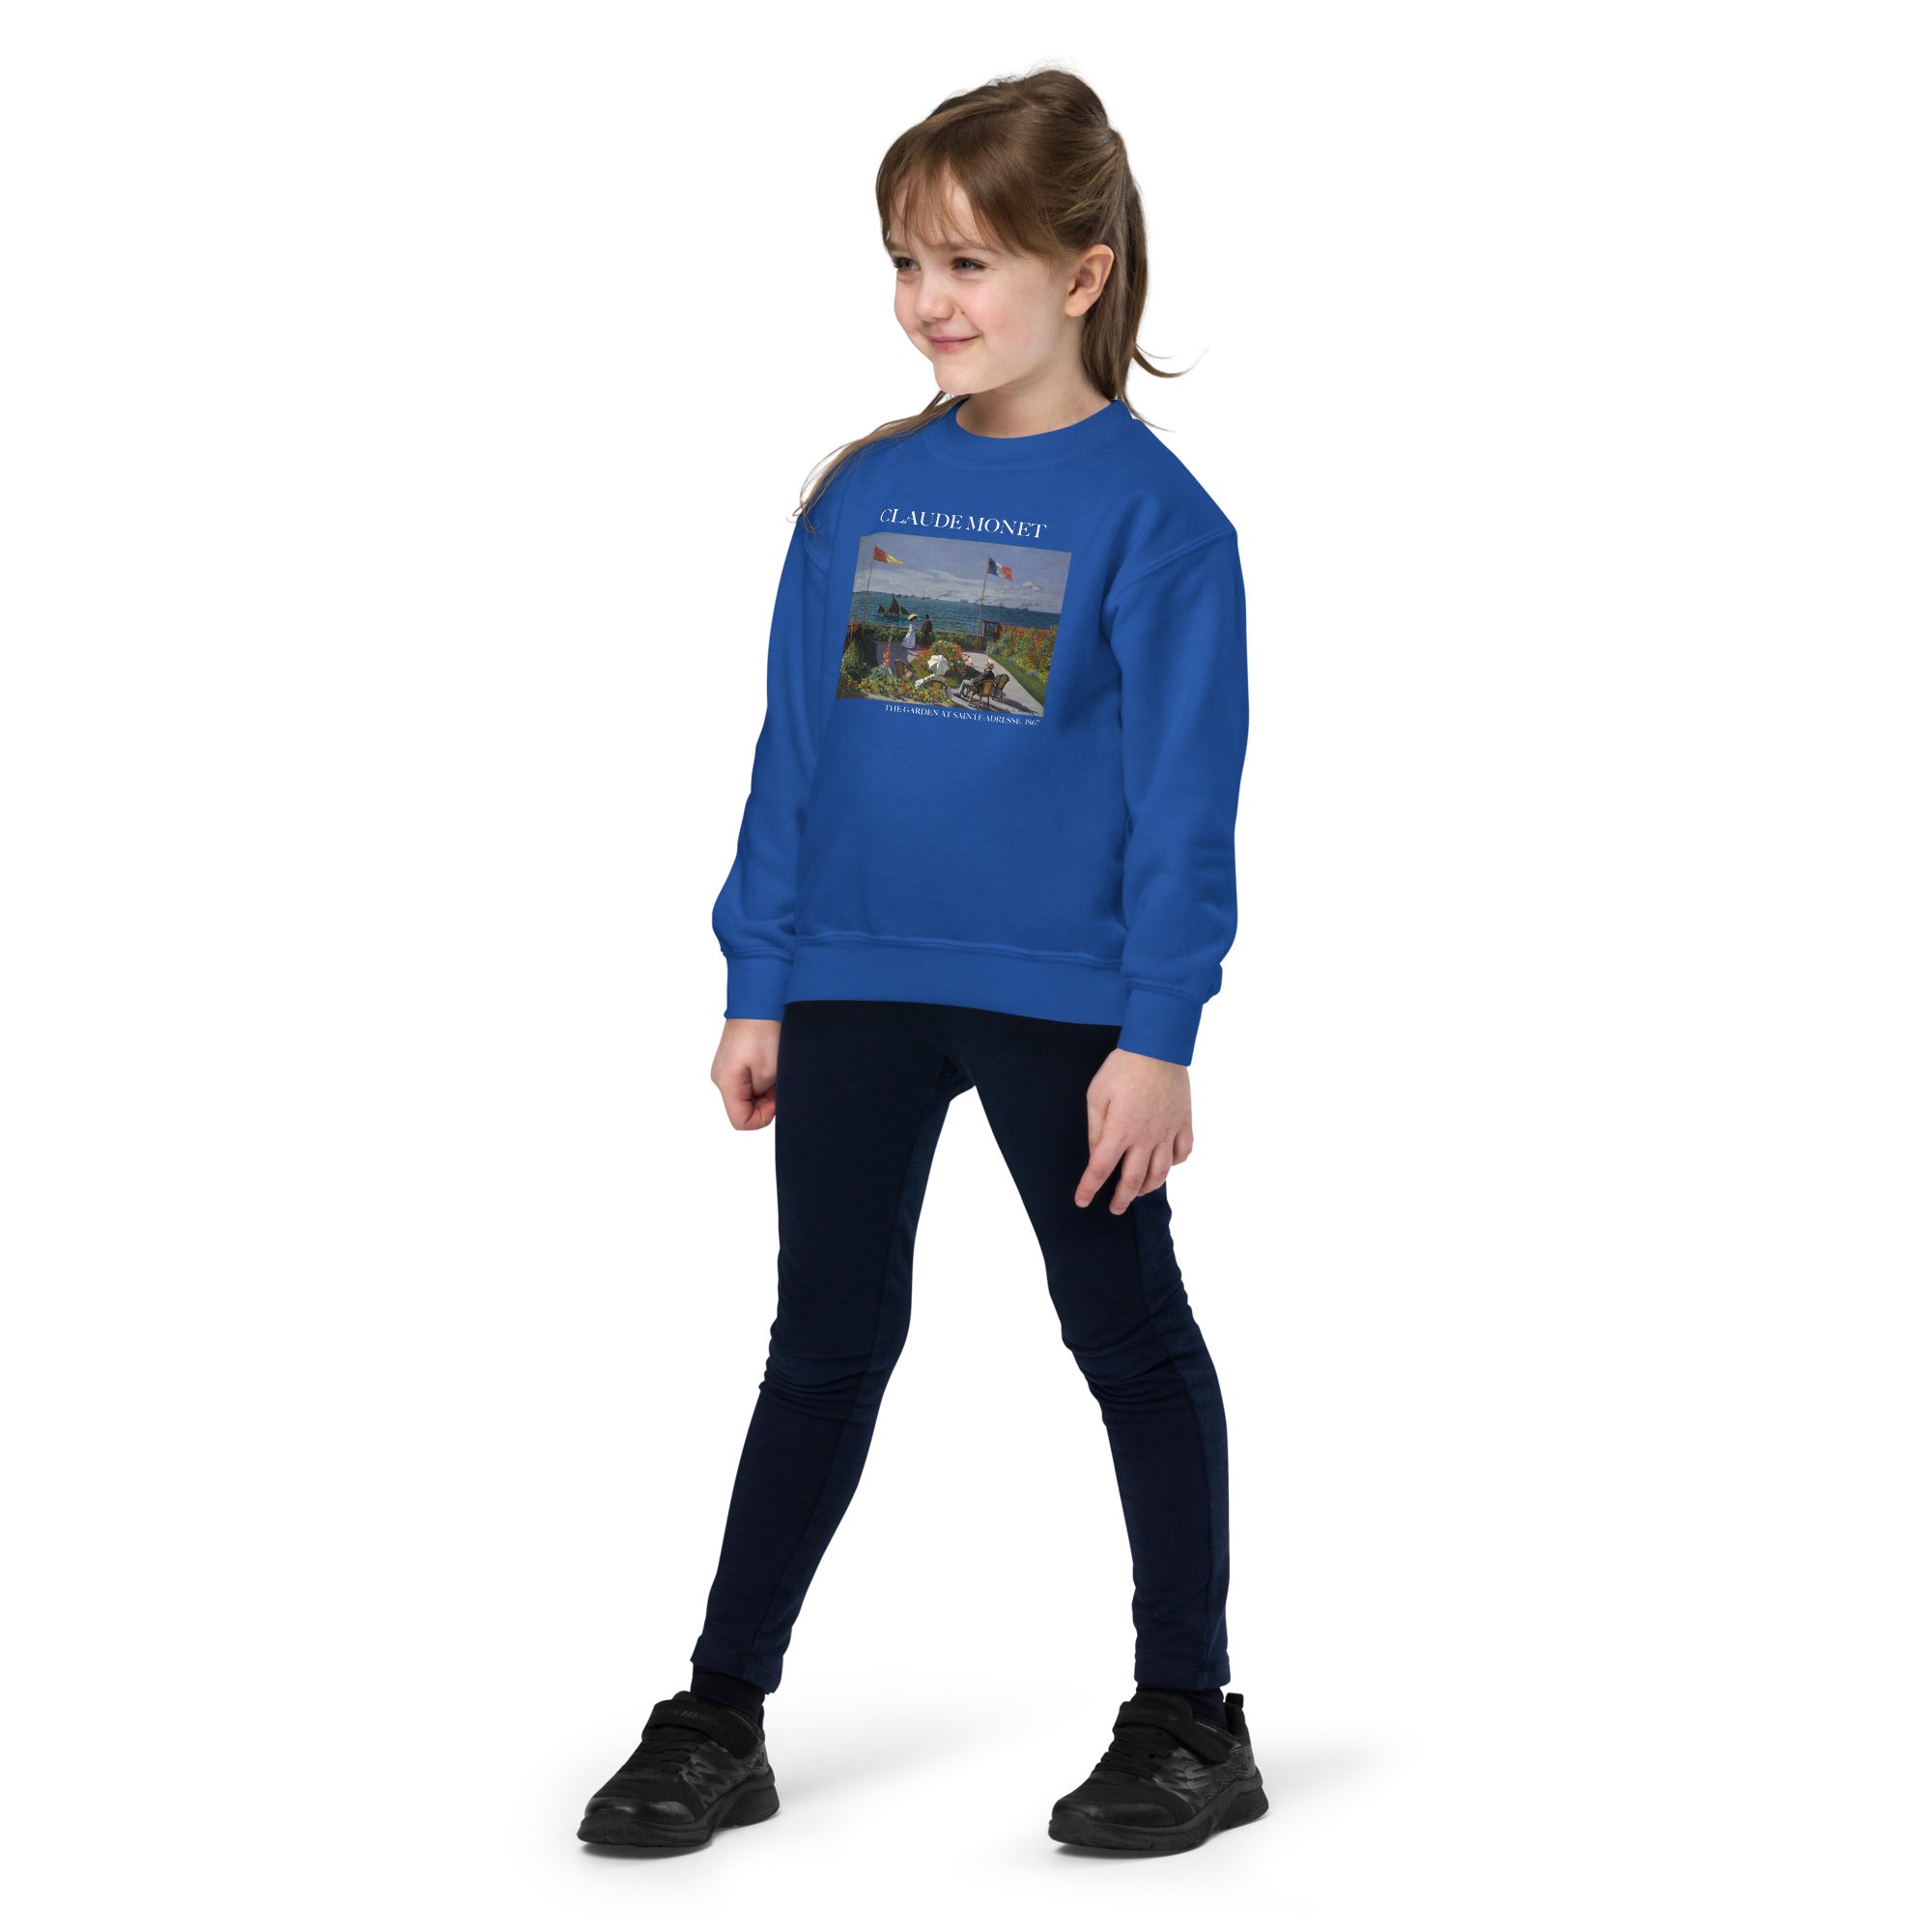 Claude Monet 'The Garden at Sainte-Adresse' Famous Painting Crewneck Sweatshirt | Premium Youth Art Sweatshirt